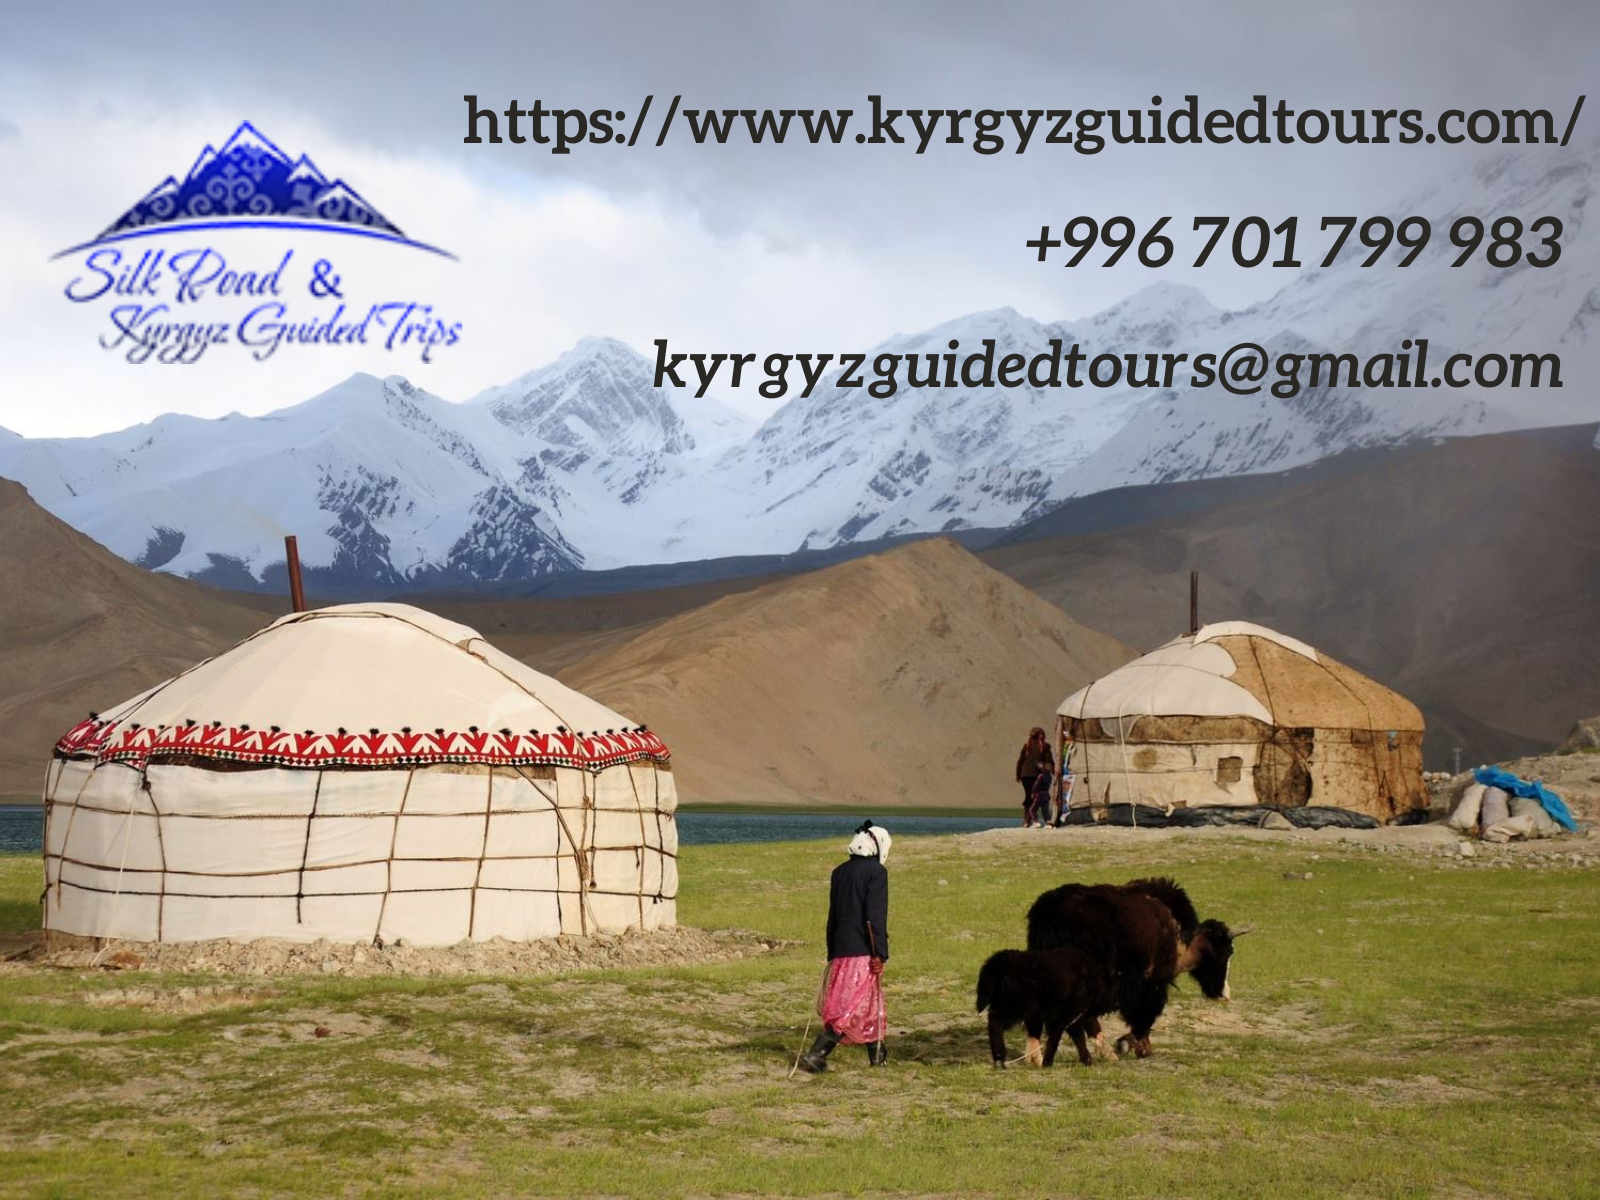 tour operators in kyrgyzstan